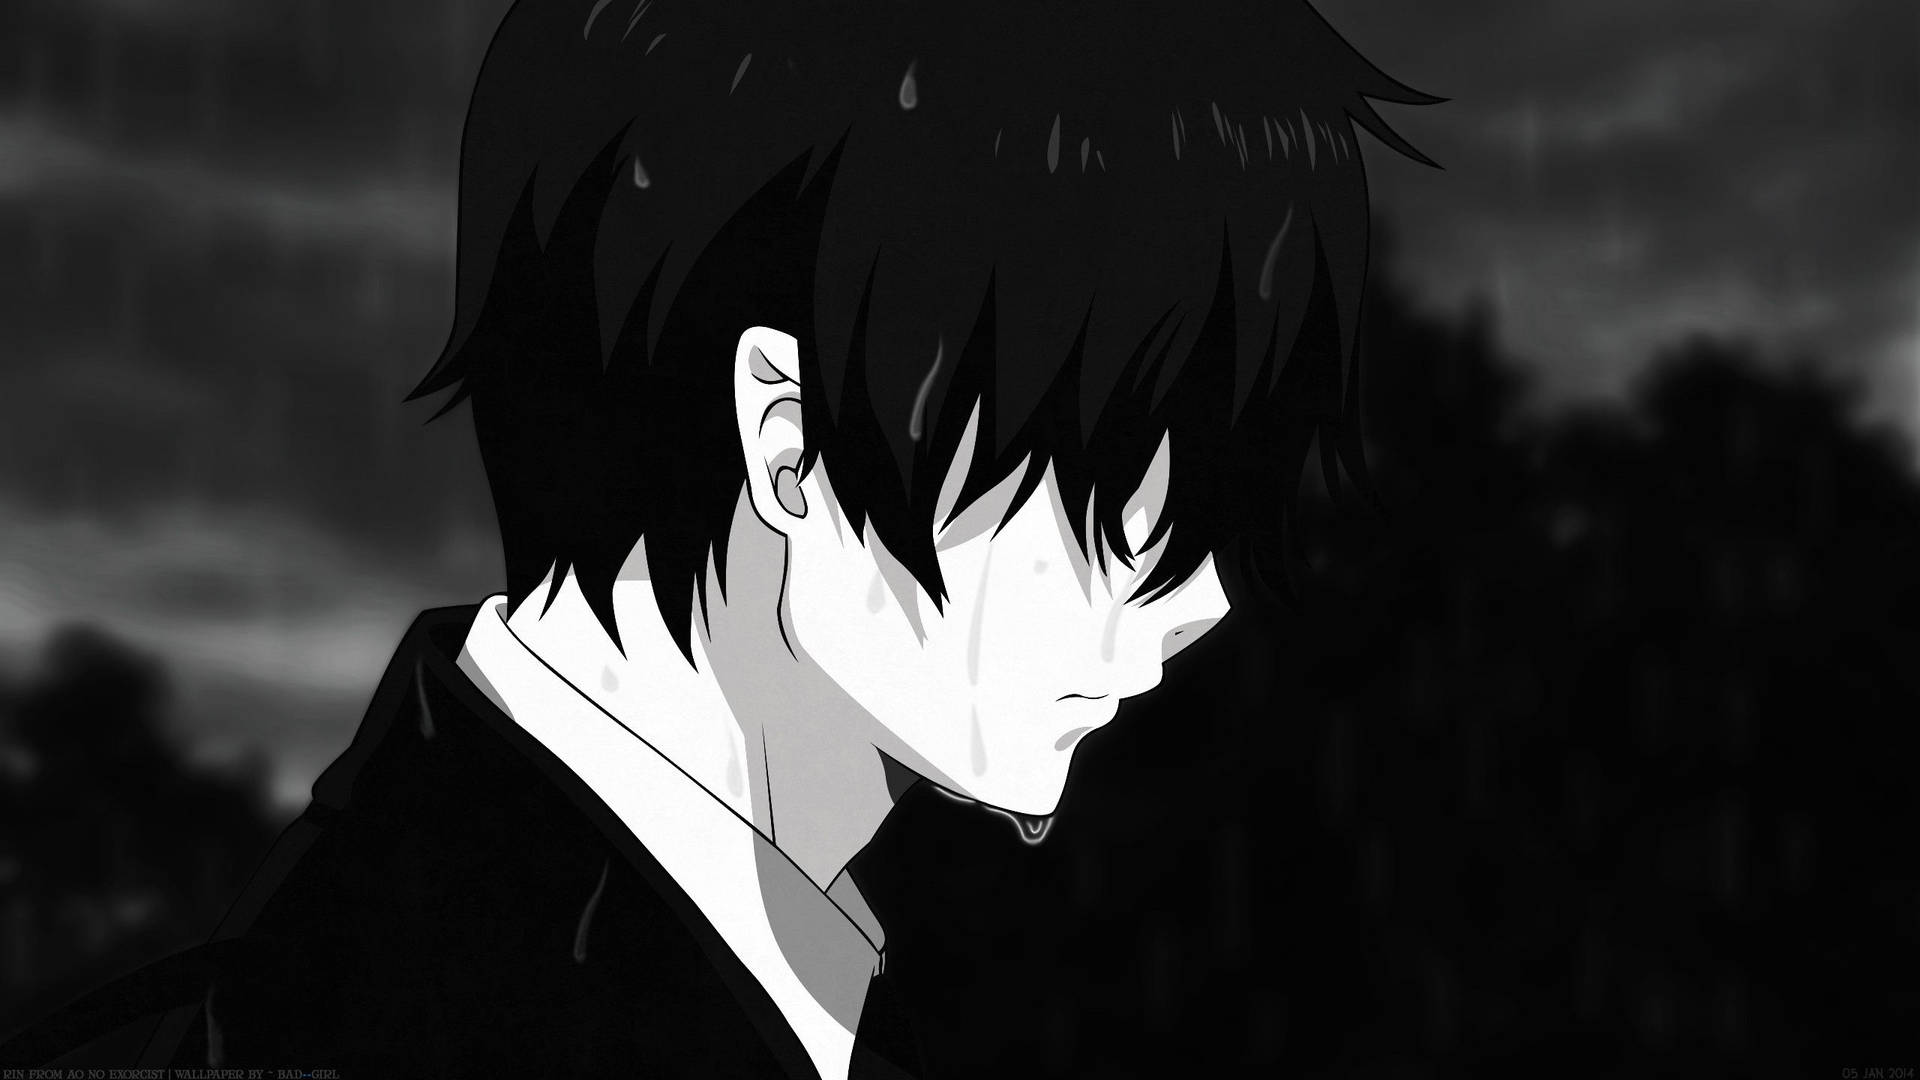 Sad Anime 2560X1440 Wallpaper and Background Image